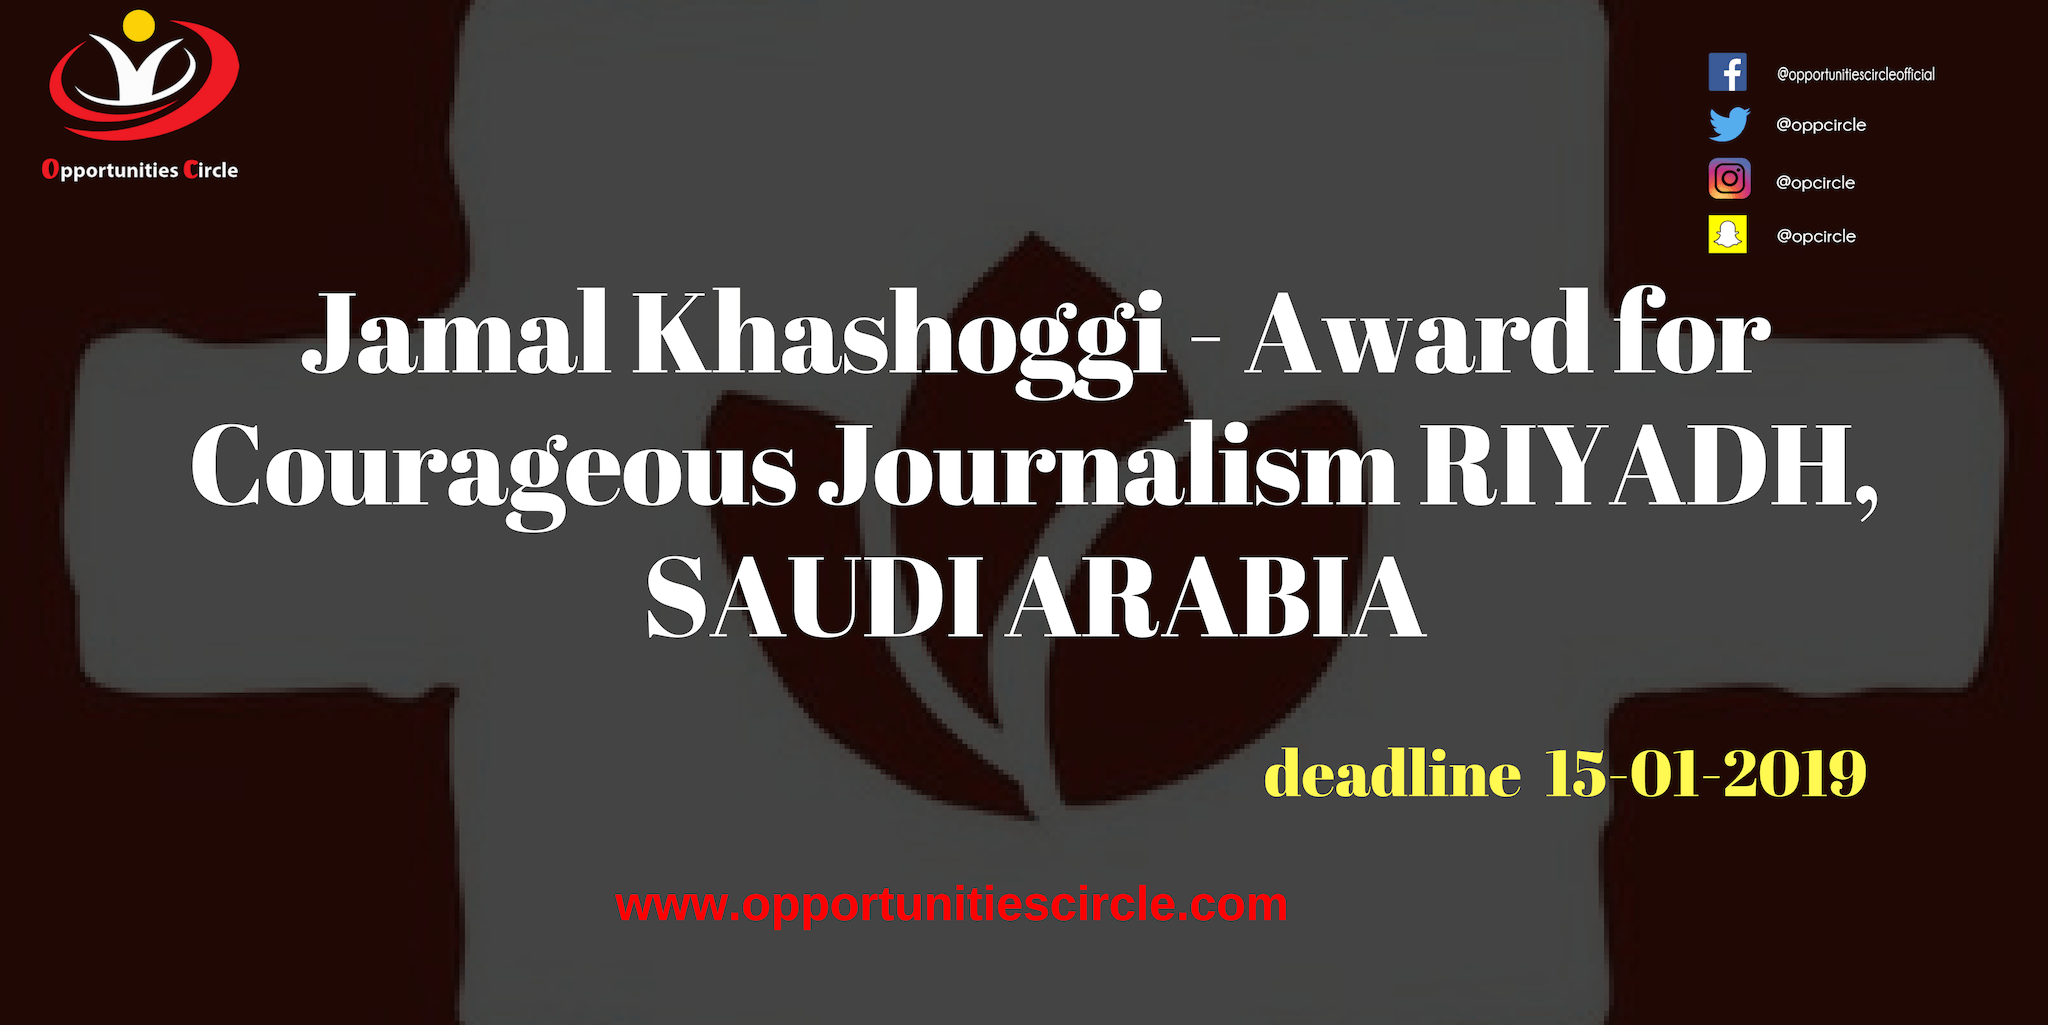 Jamal Khashoggi - Award for Courageous Journalism RIYADH, SAUDI ARABIA